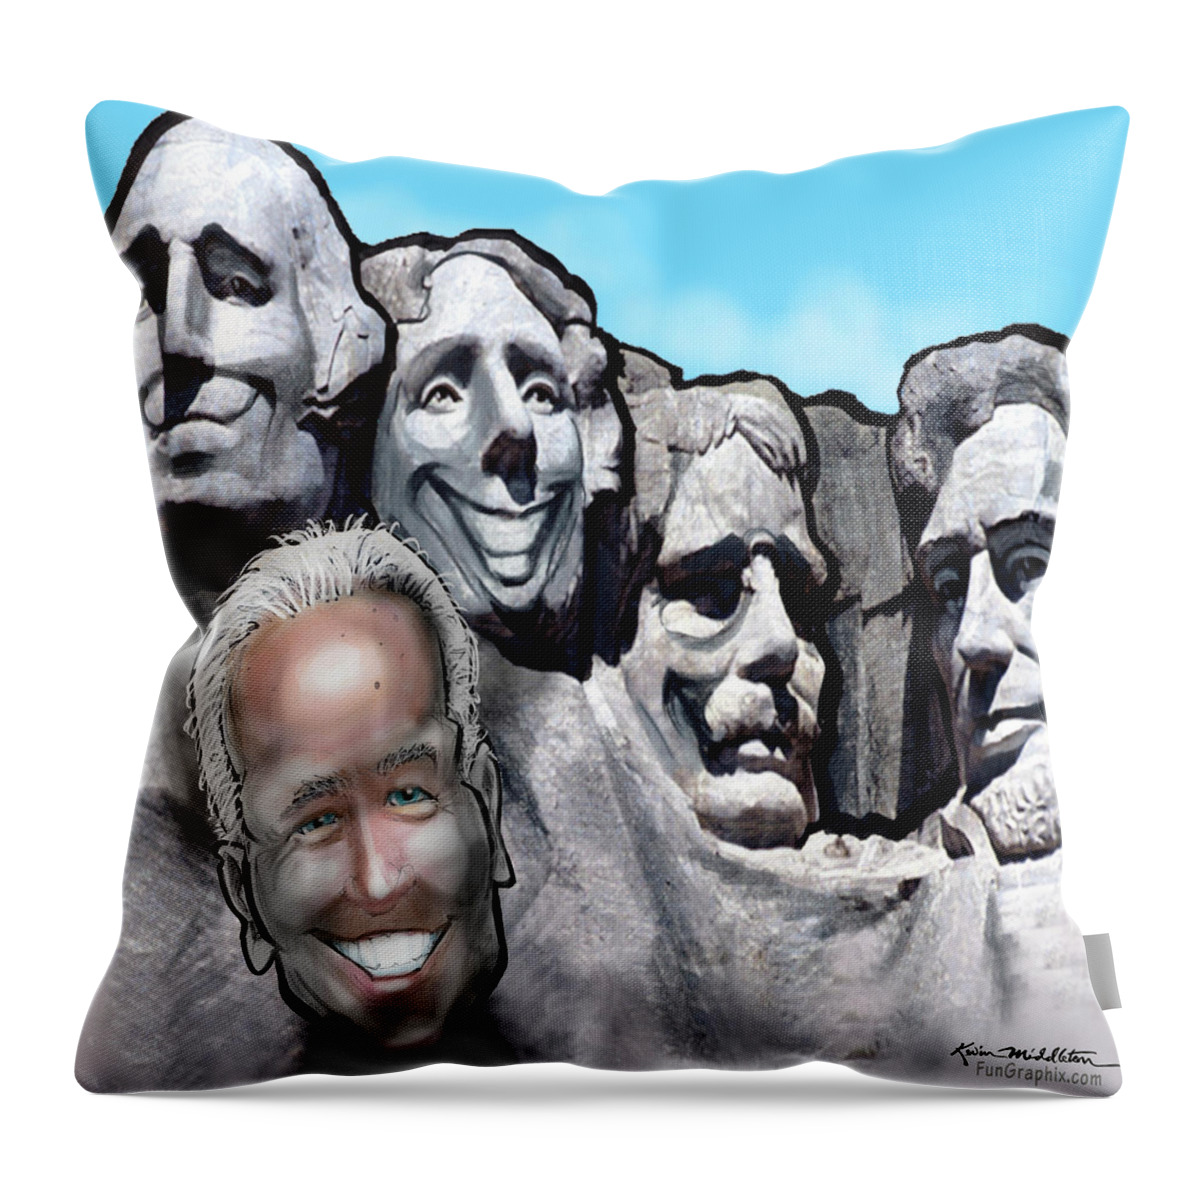 Mount Rushmore Throw Pillow featuring the digital art Mount Rushmore w Biden by Kevin Middleton